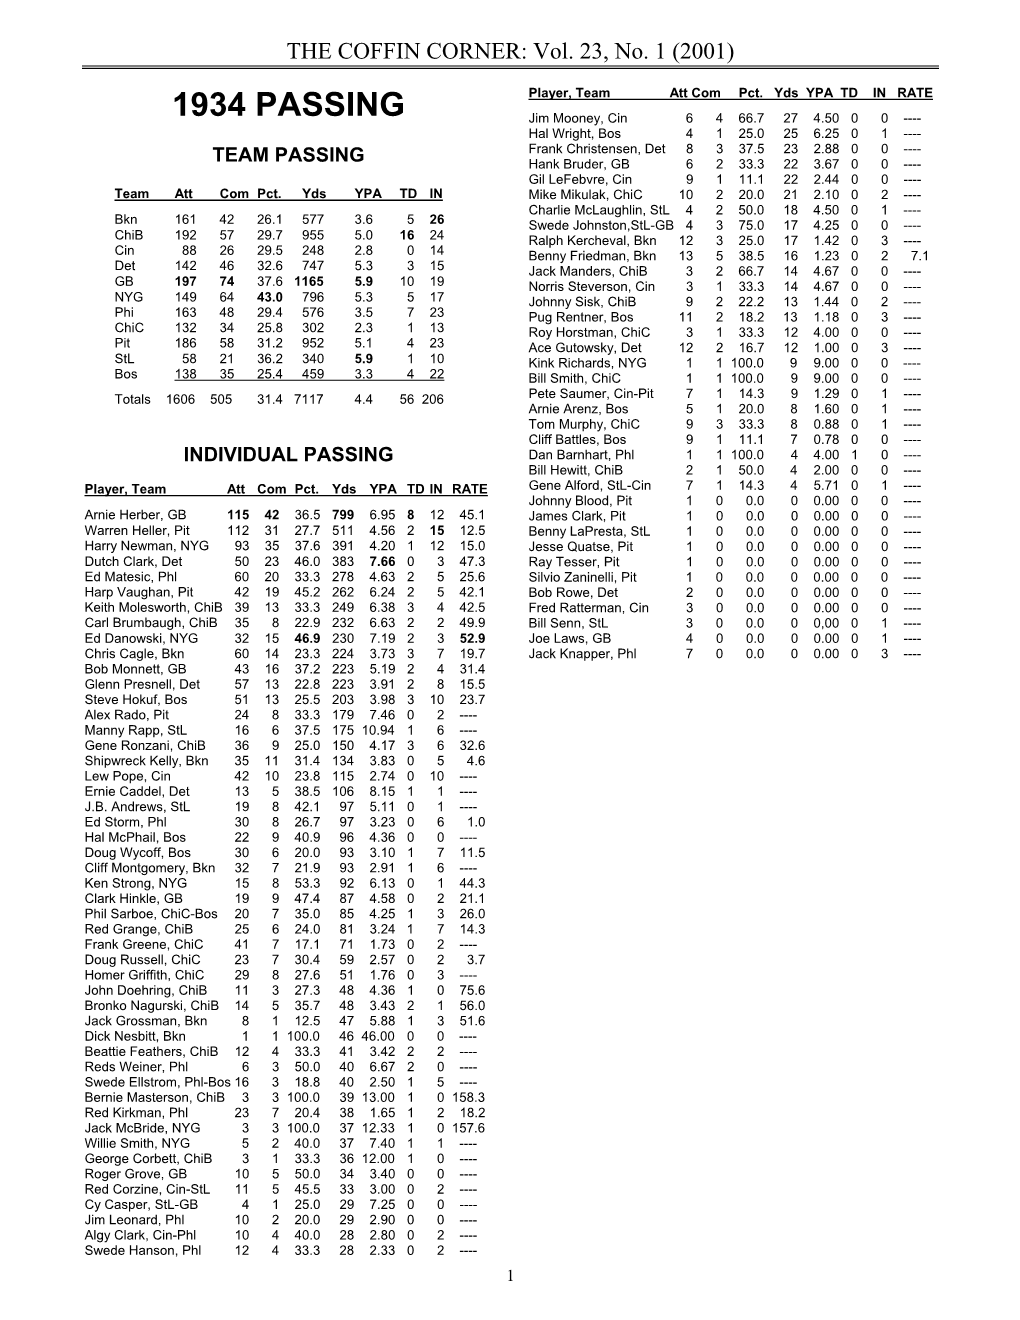 1934 NFL Statistics